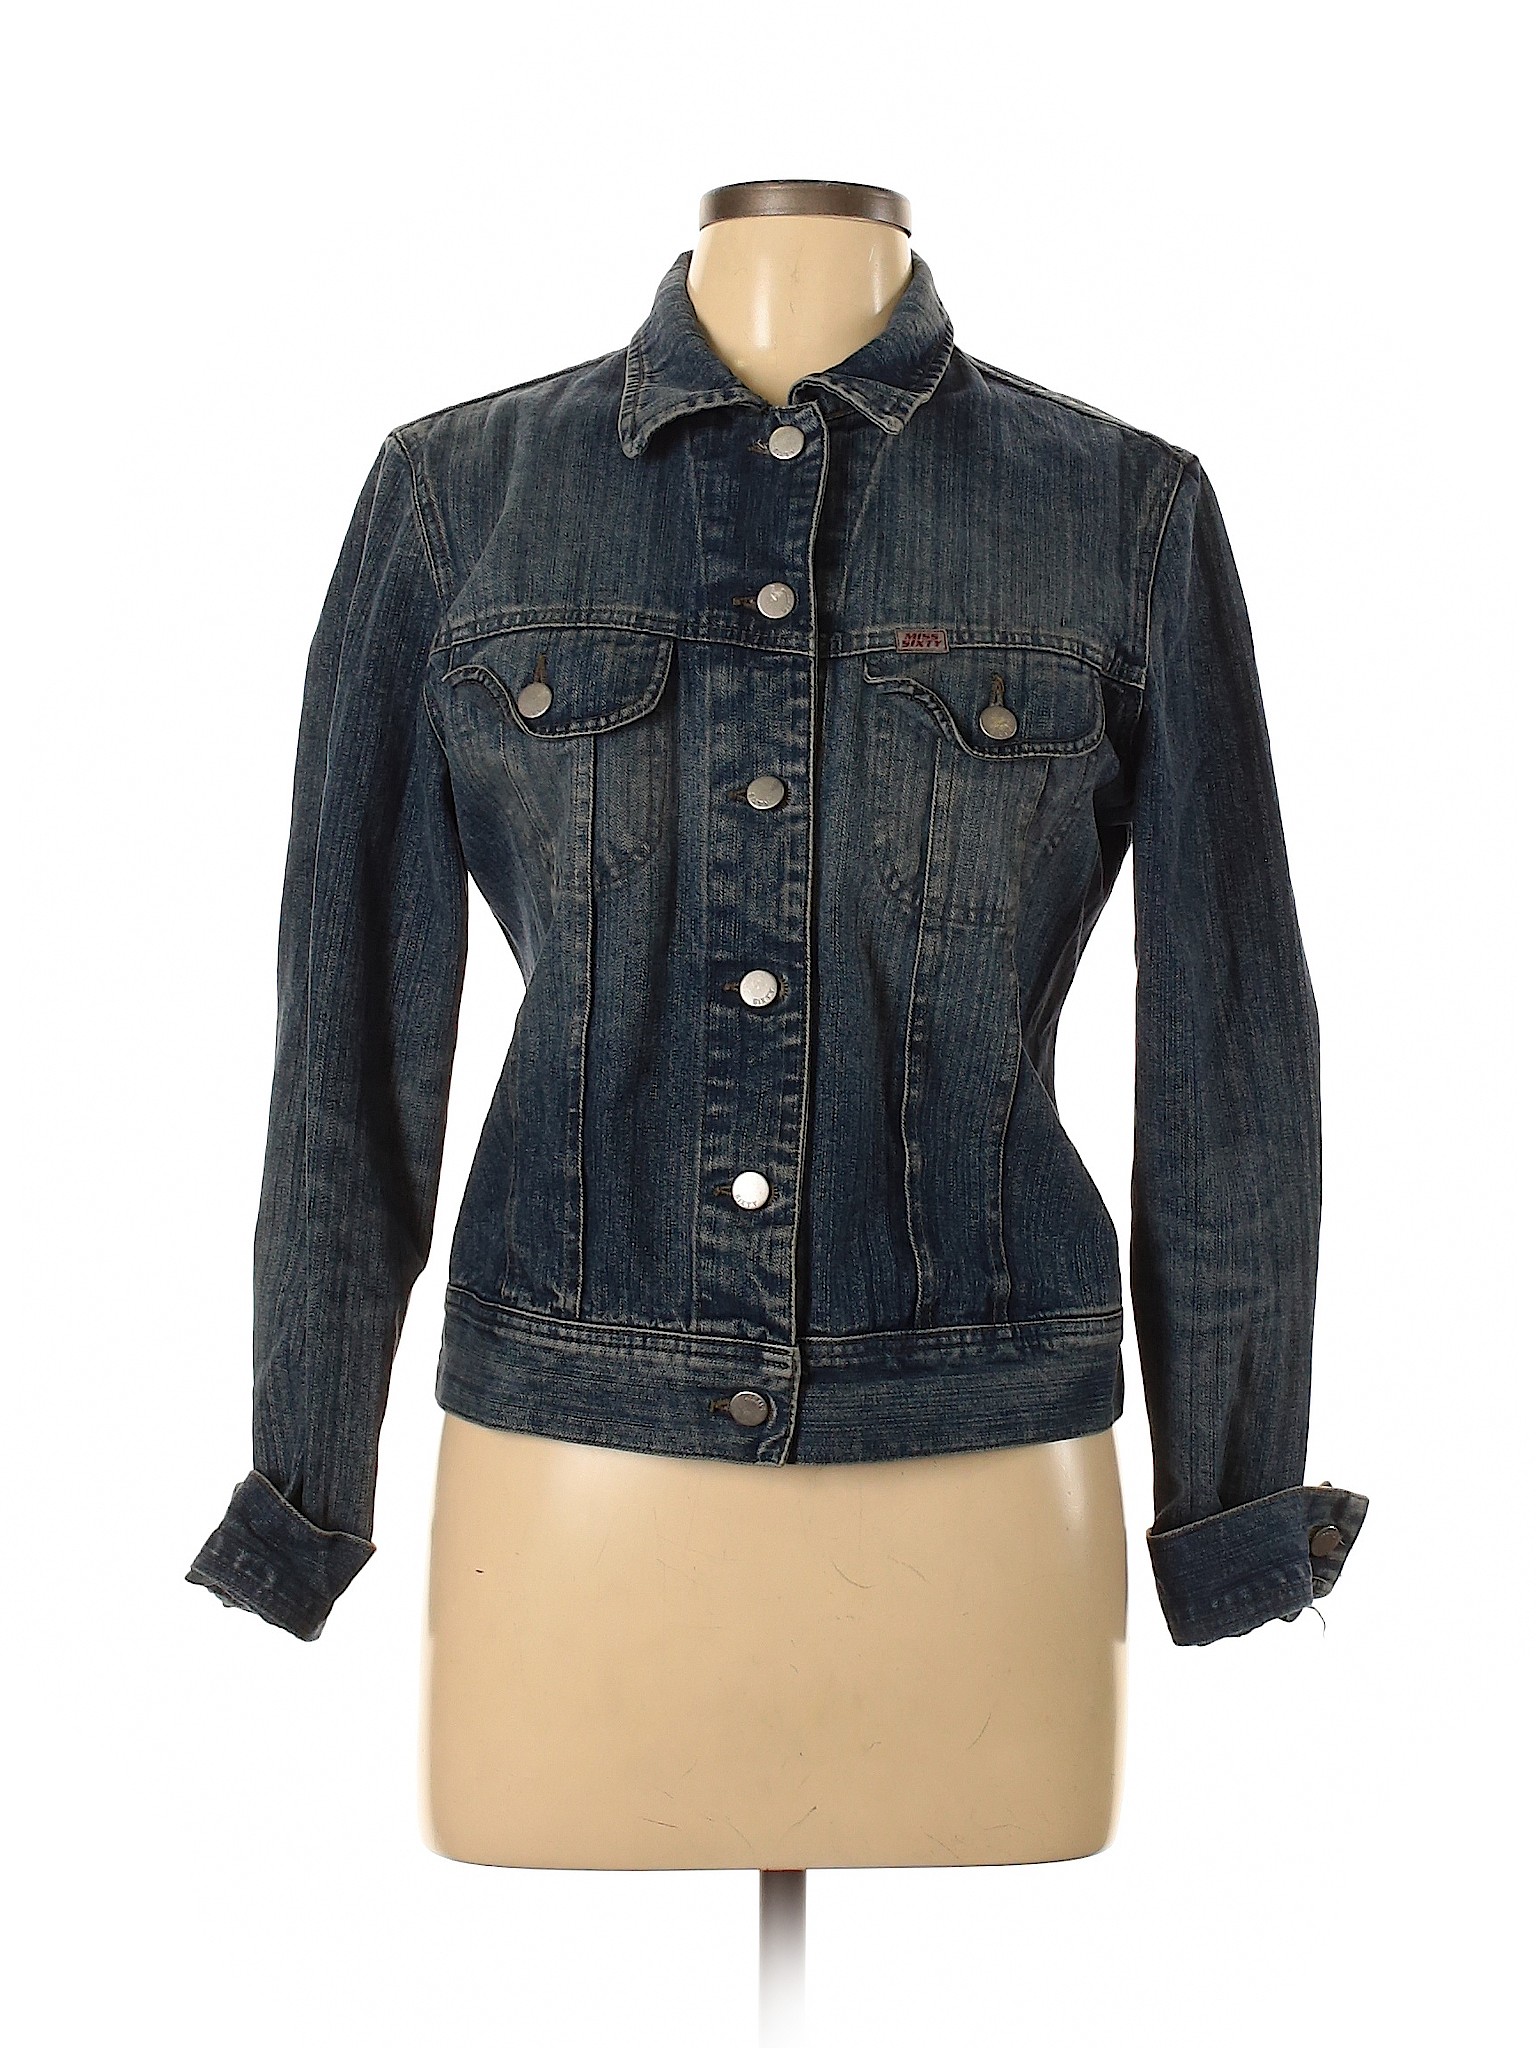 Miss Sixty Women Blue Denim Jacket L | eBay